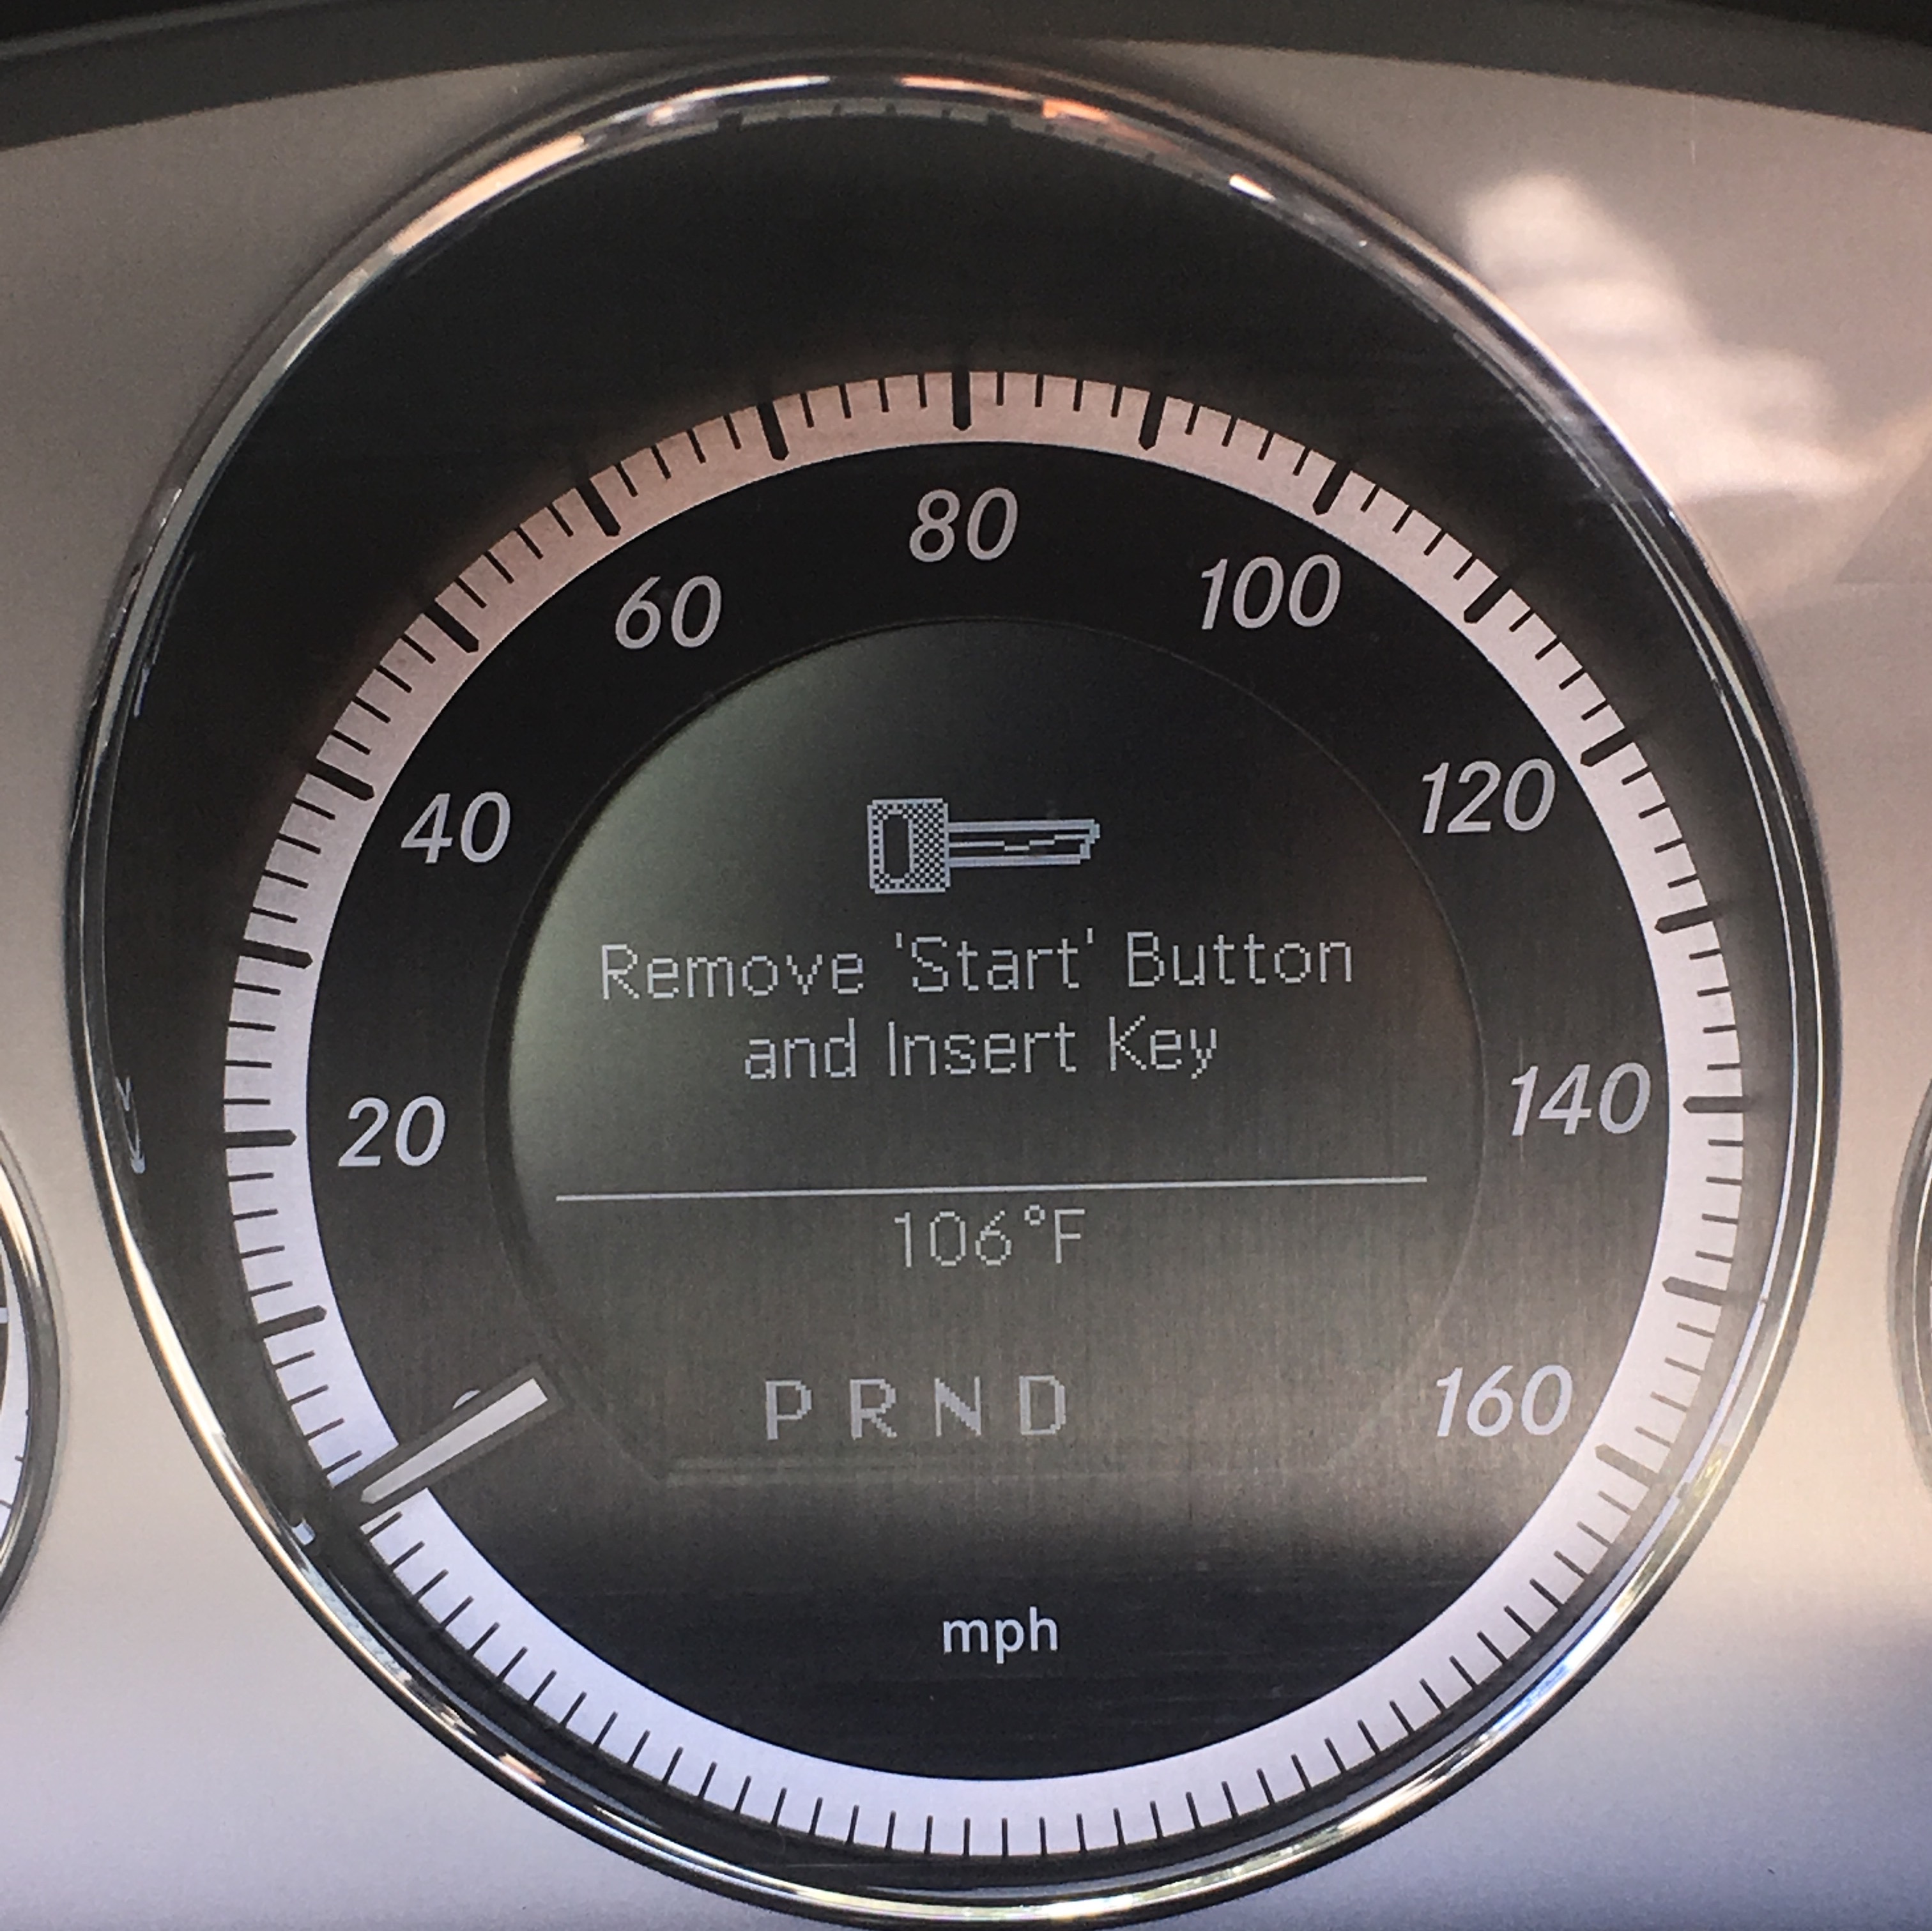 HELP: KEYLESS GO Error - Remove 'Start' Button and Insert Key